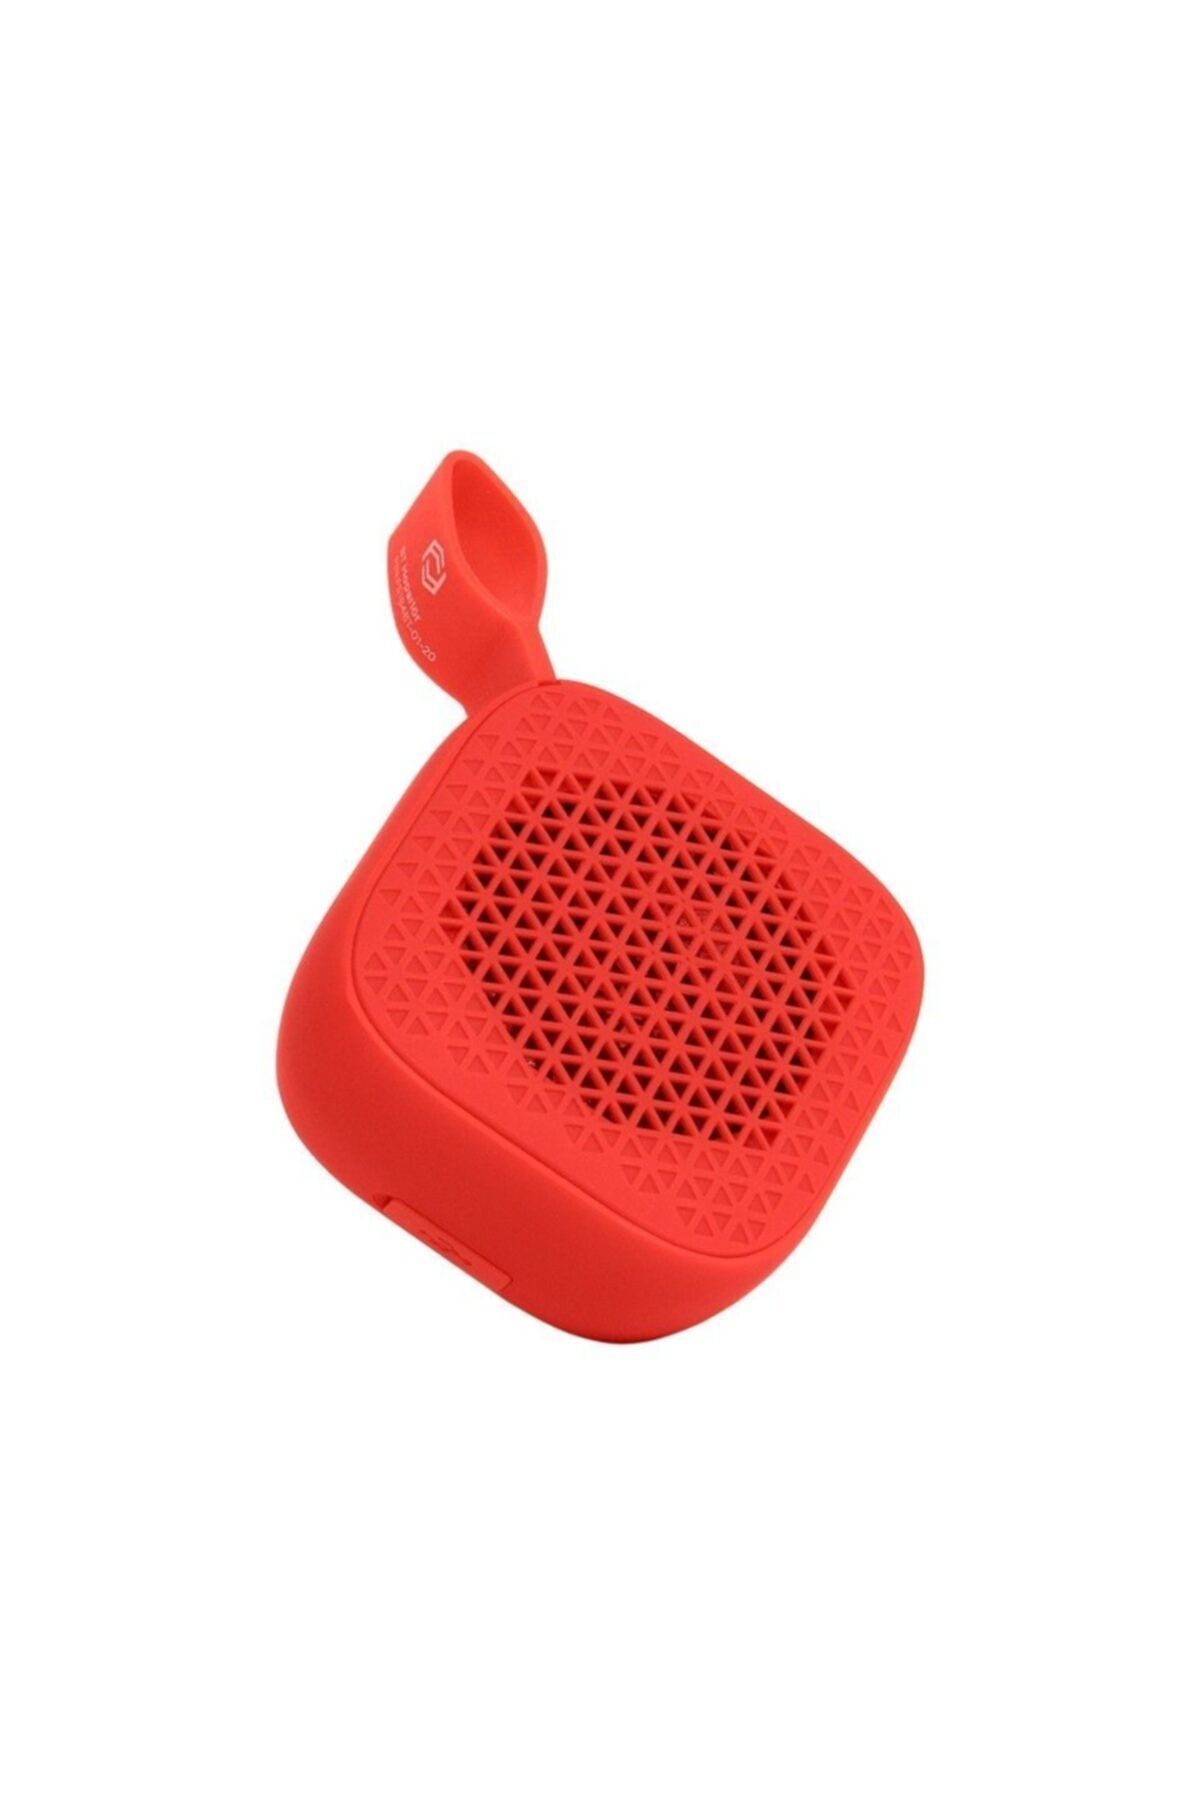 Frisby Fs-184bt 2.0 Bluetooth Hoparlör,kırmızı